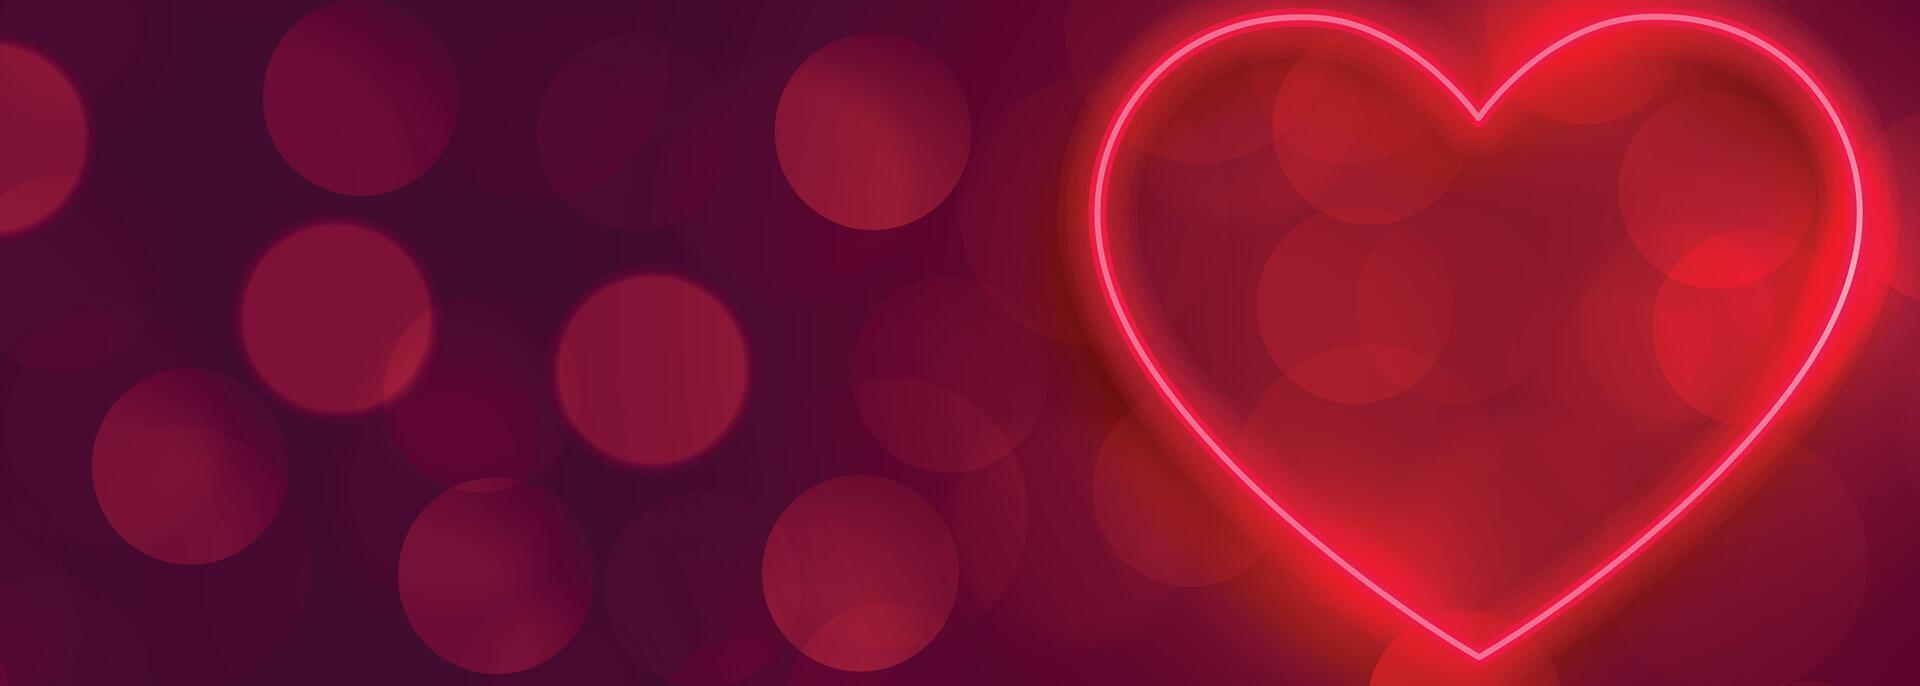 skön röd valentines dag hjärtan baner design vektor